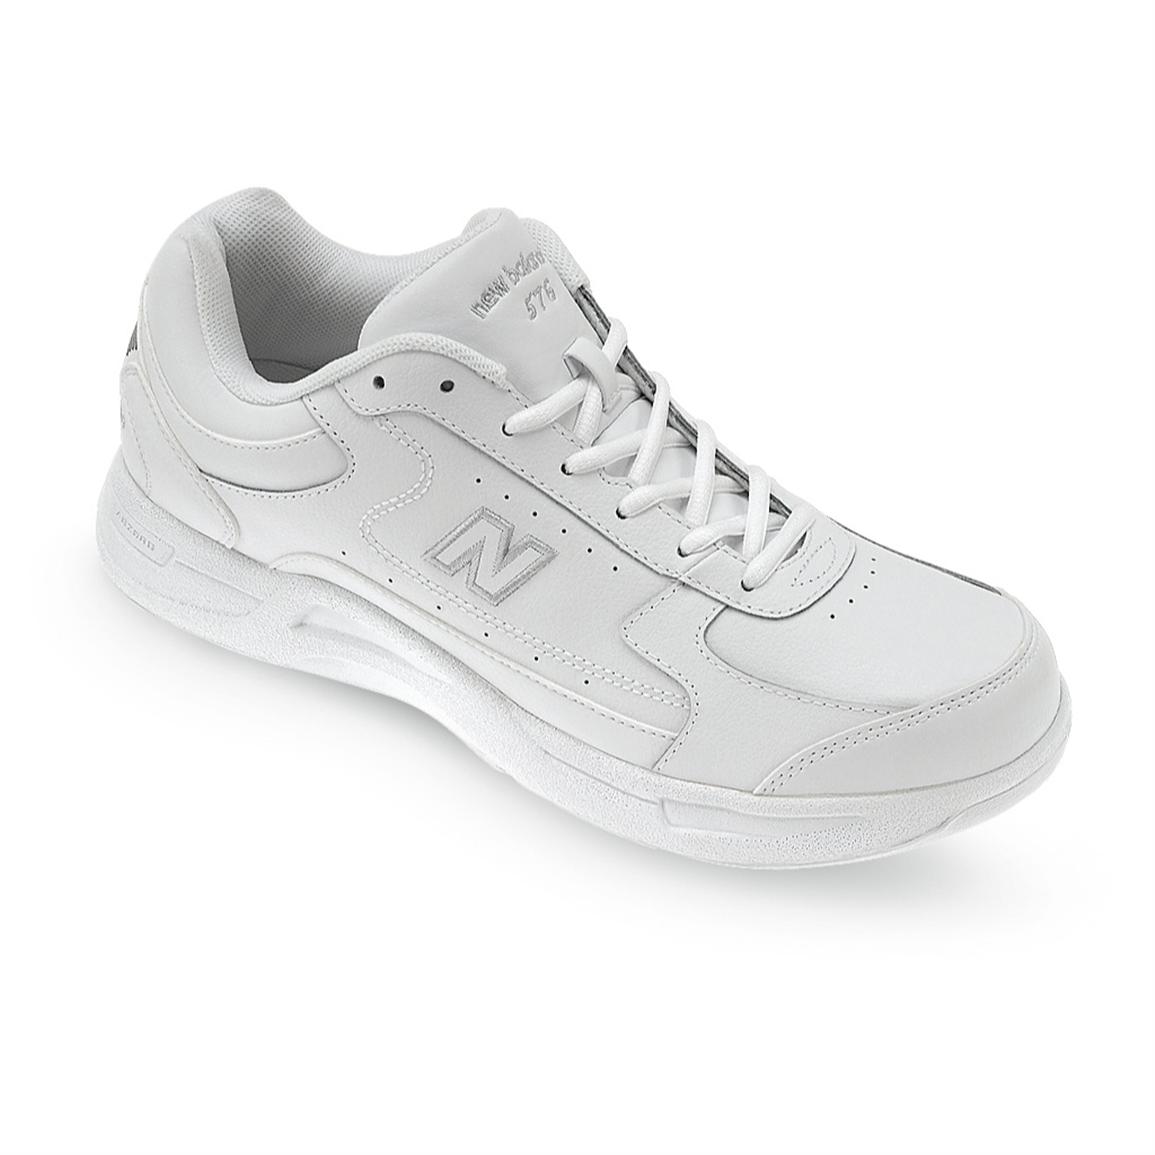 Men's New Balance® 576 Walking Shoes, White - 201093, Running Shoes ...